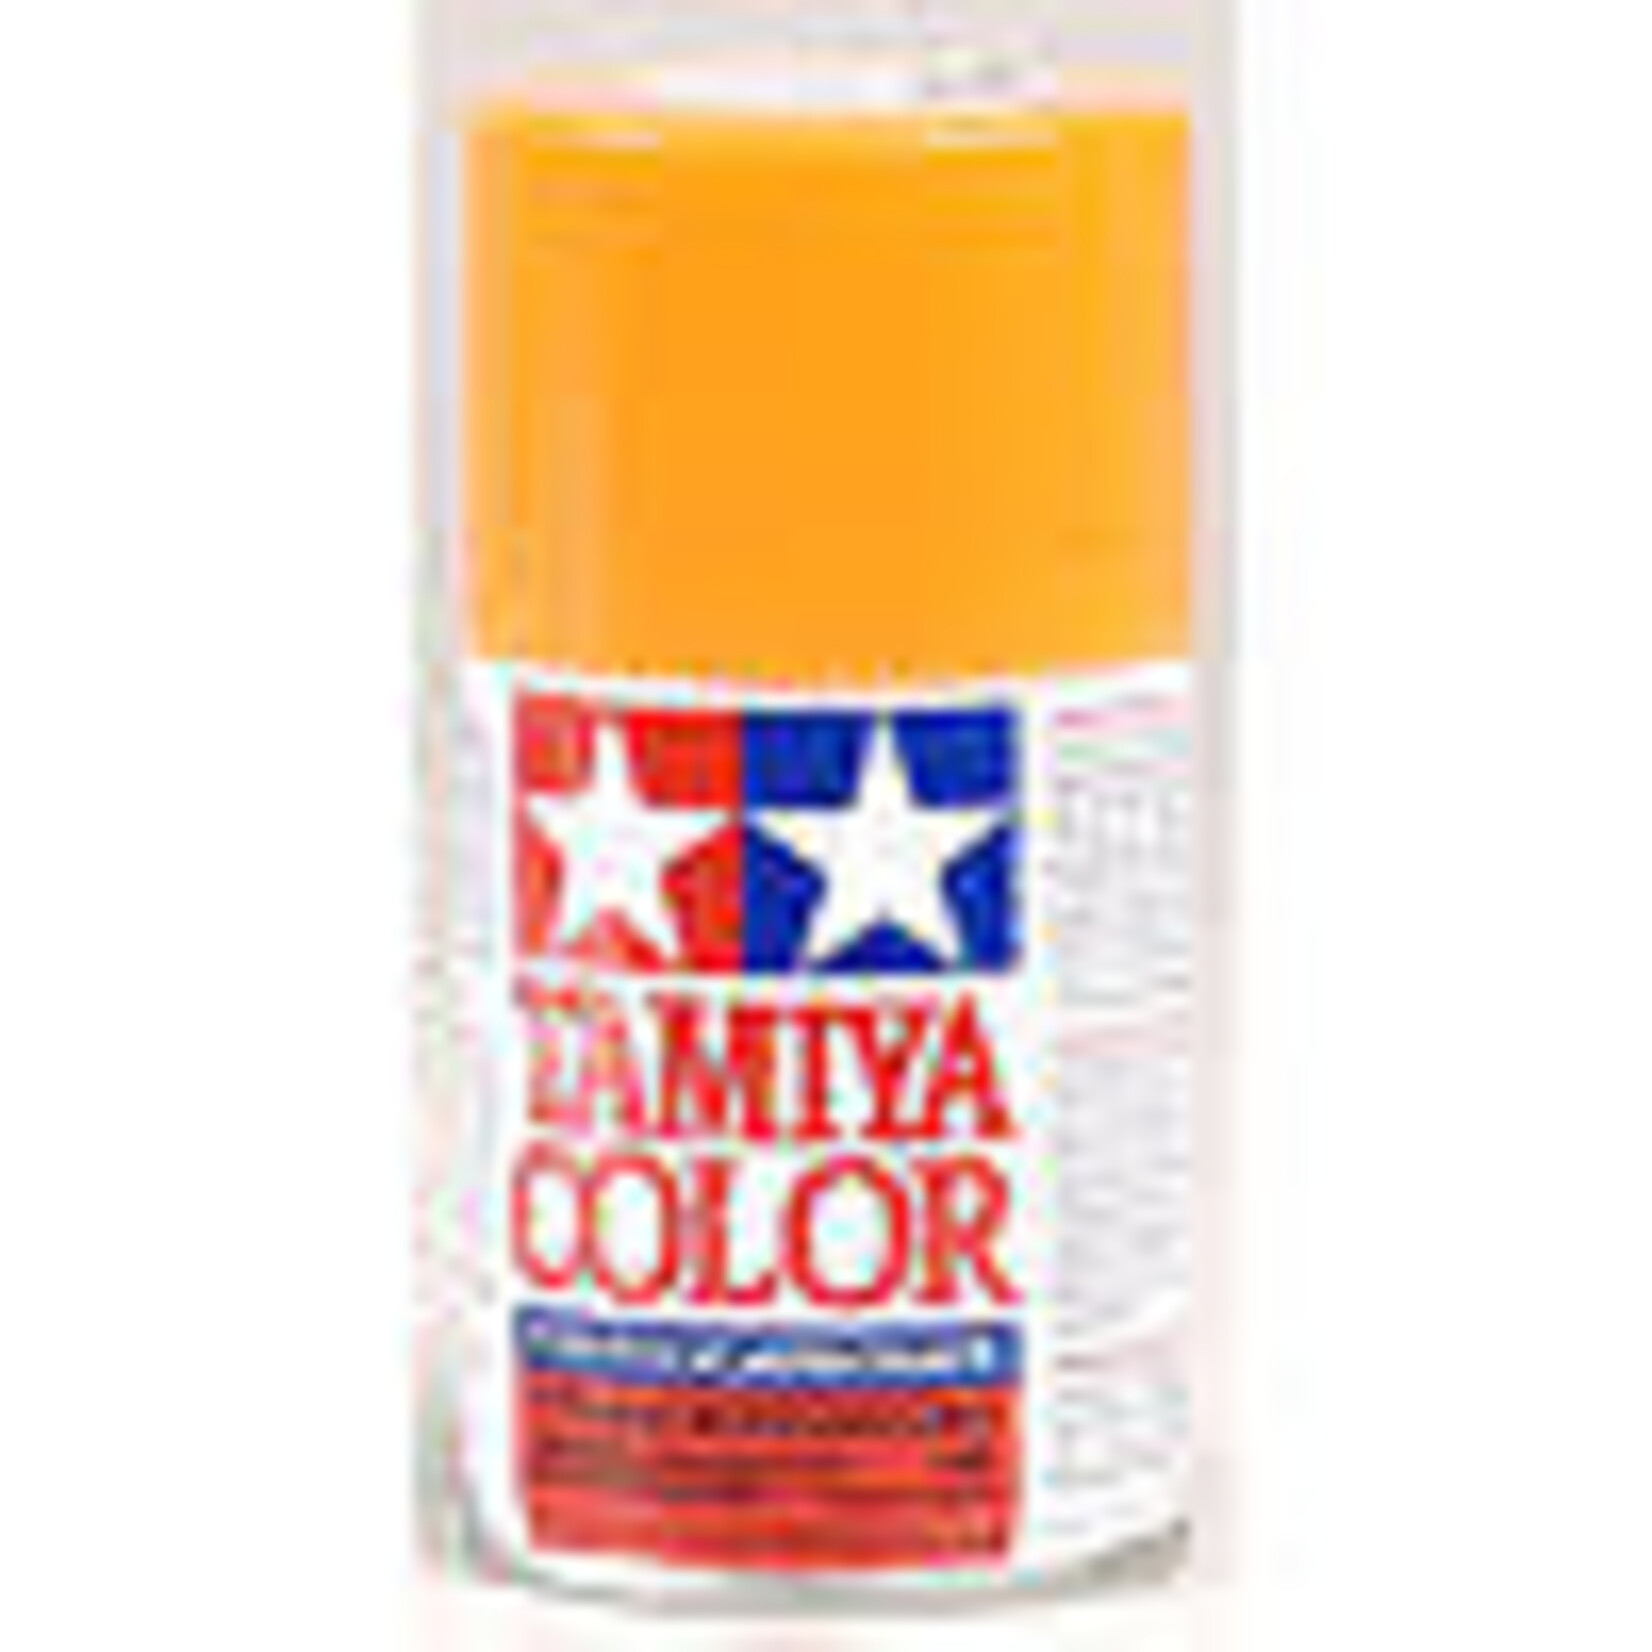 Tamiya TAM86024  Tamiya PS-24 Fluorescent Orange Lexan Spray Paint (100ml)